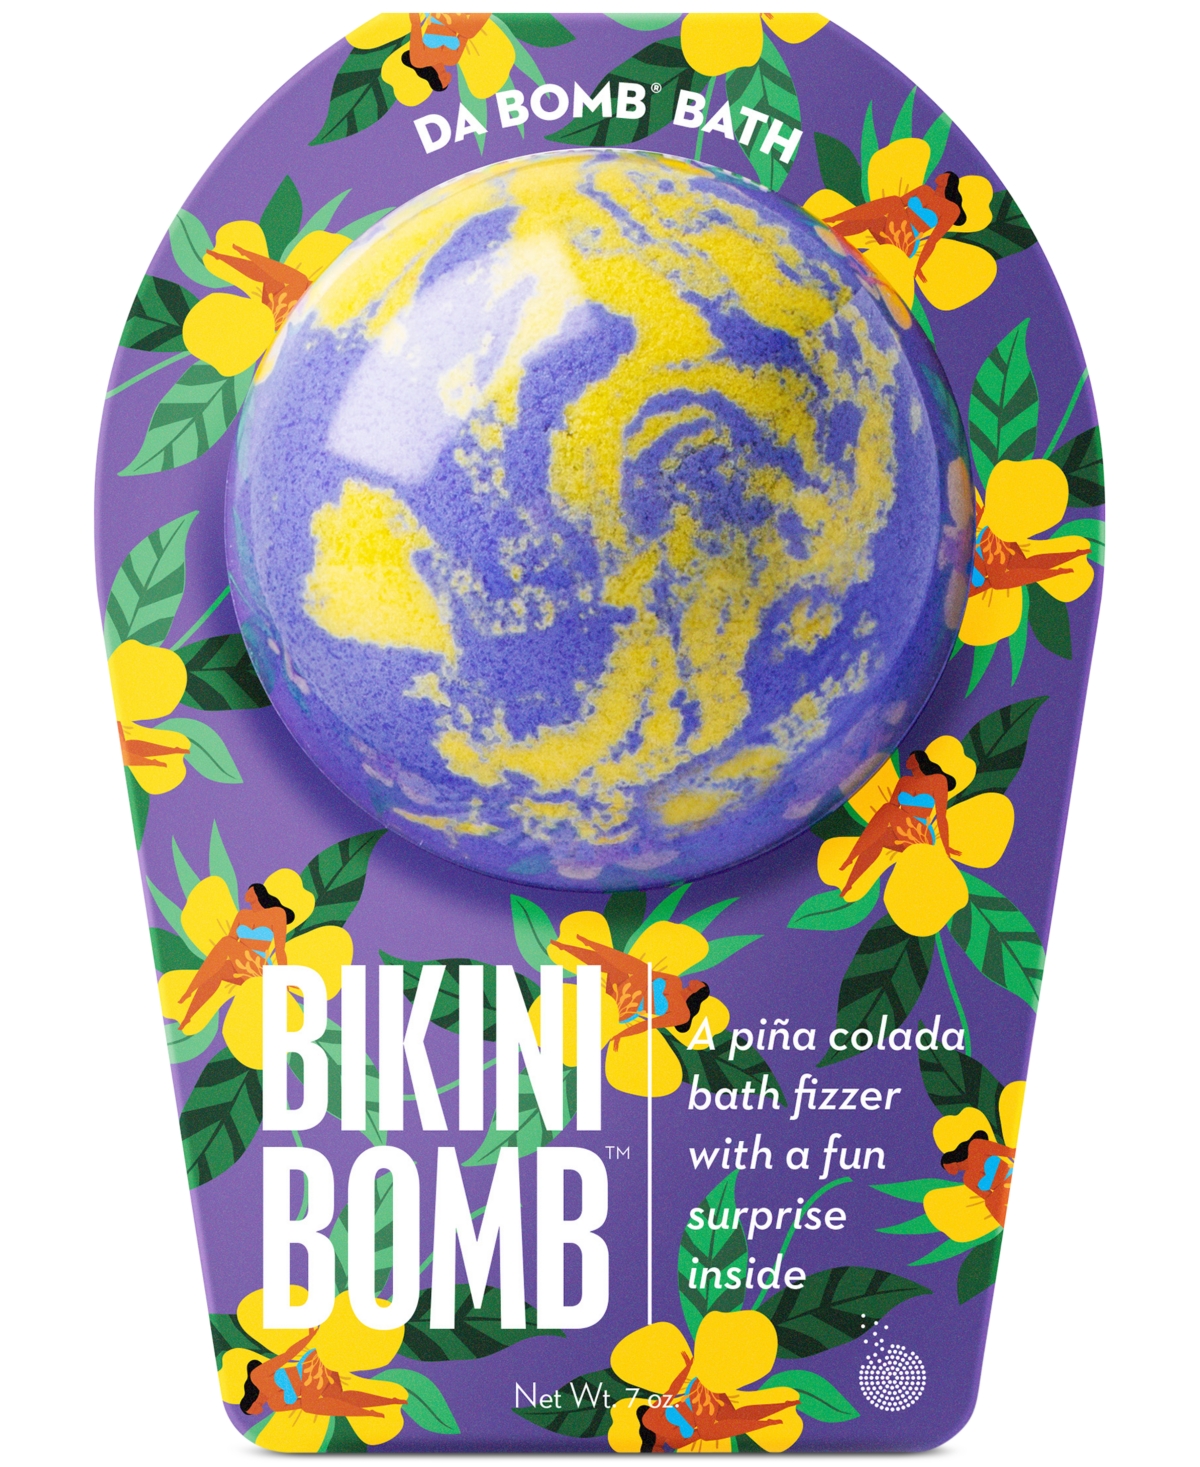 Bikini Bath Bomb, 7 oz.